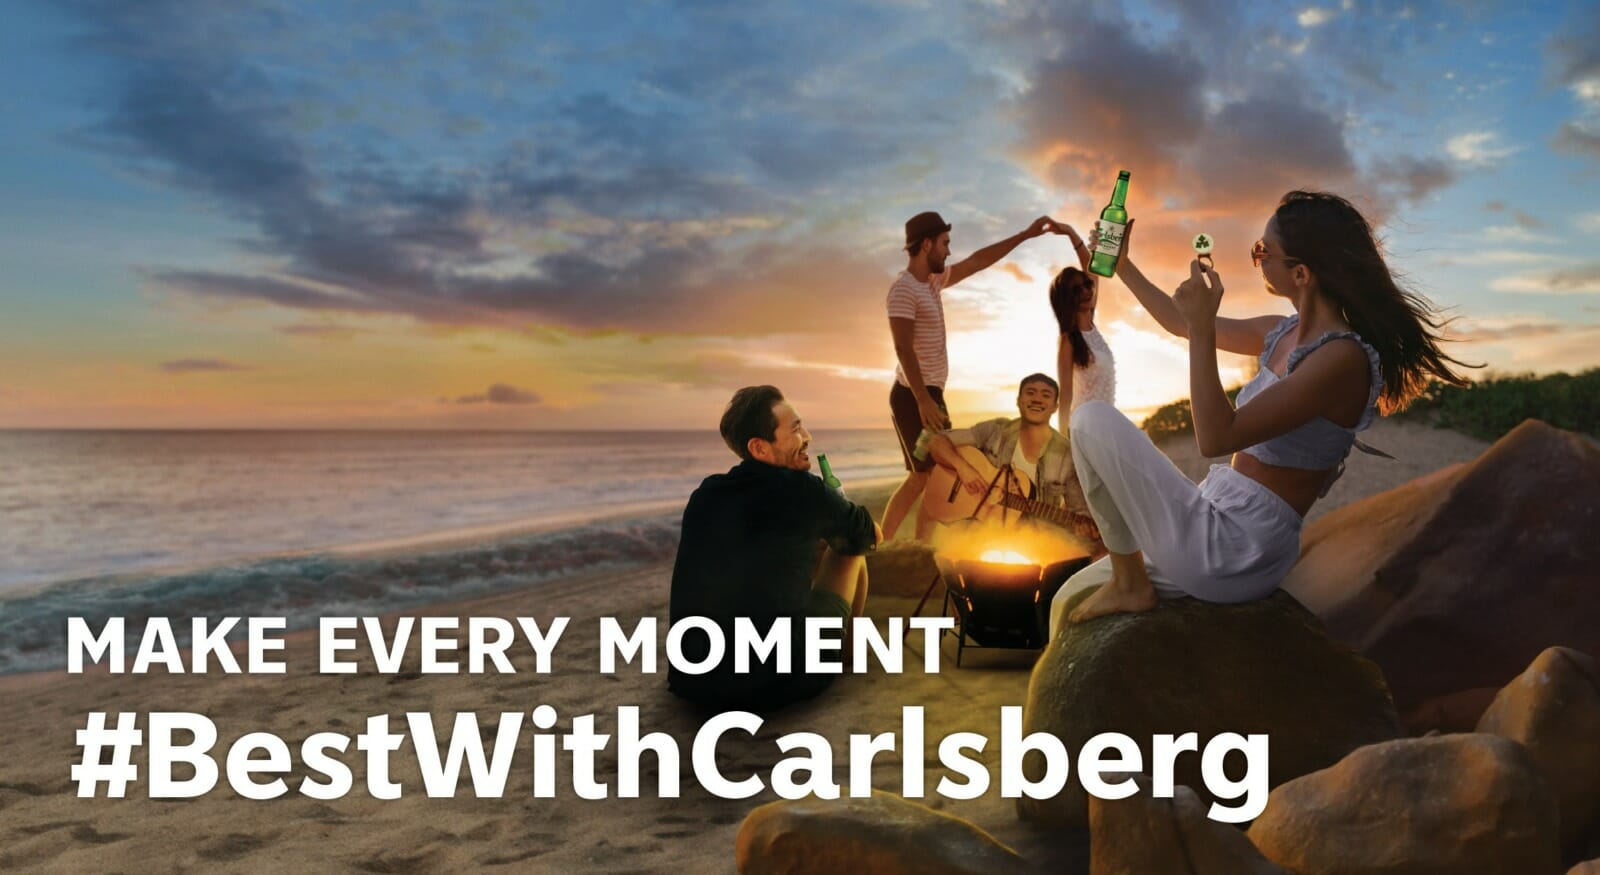 CarlsbergBest BestWithCarlsberg image for The Star